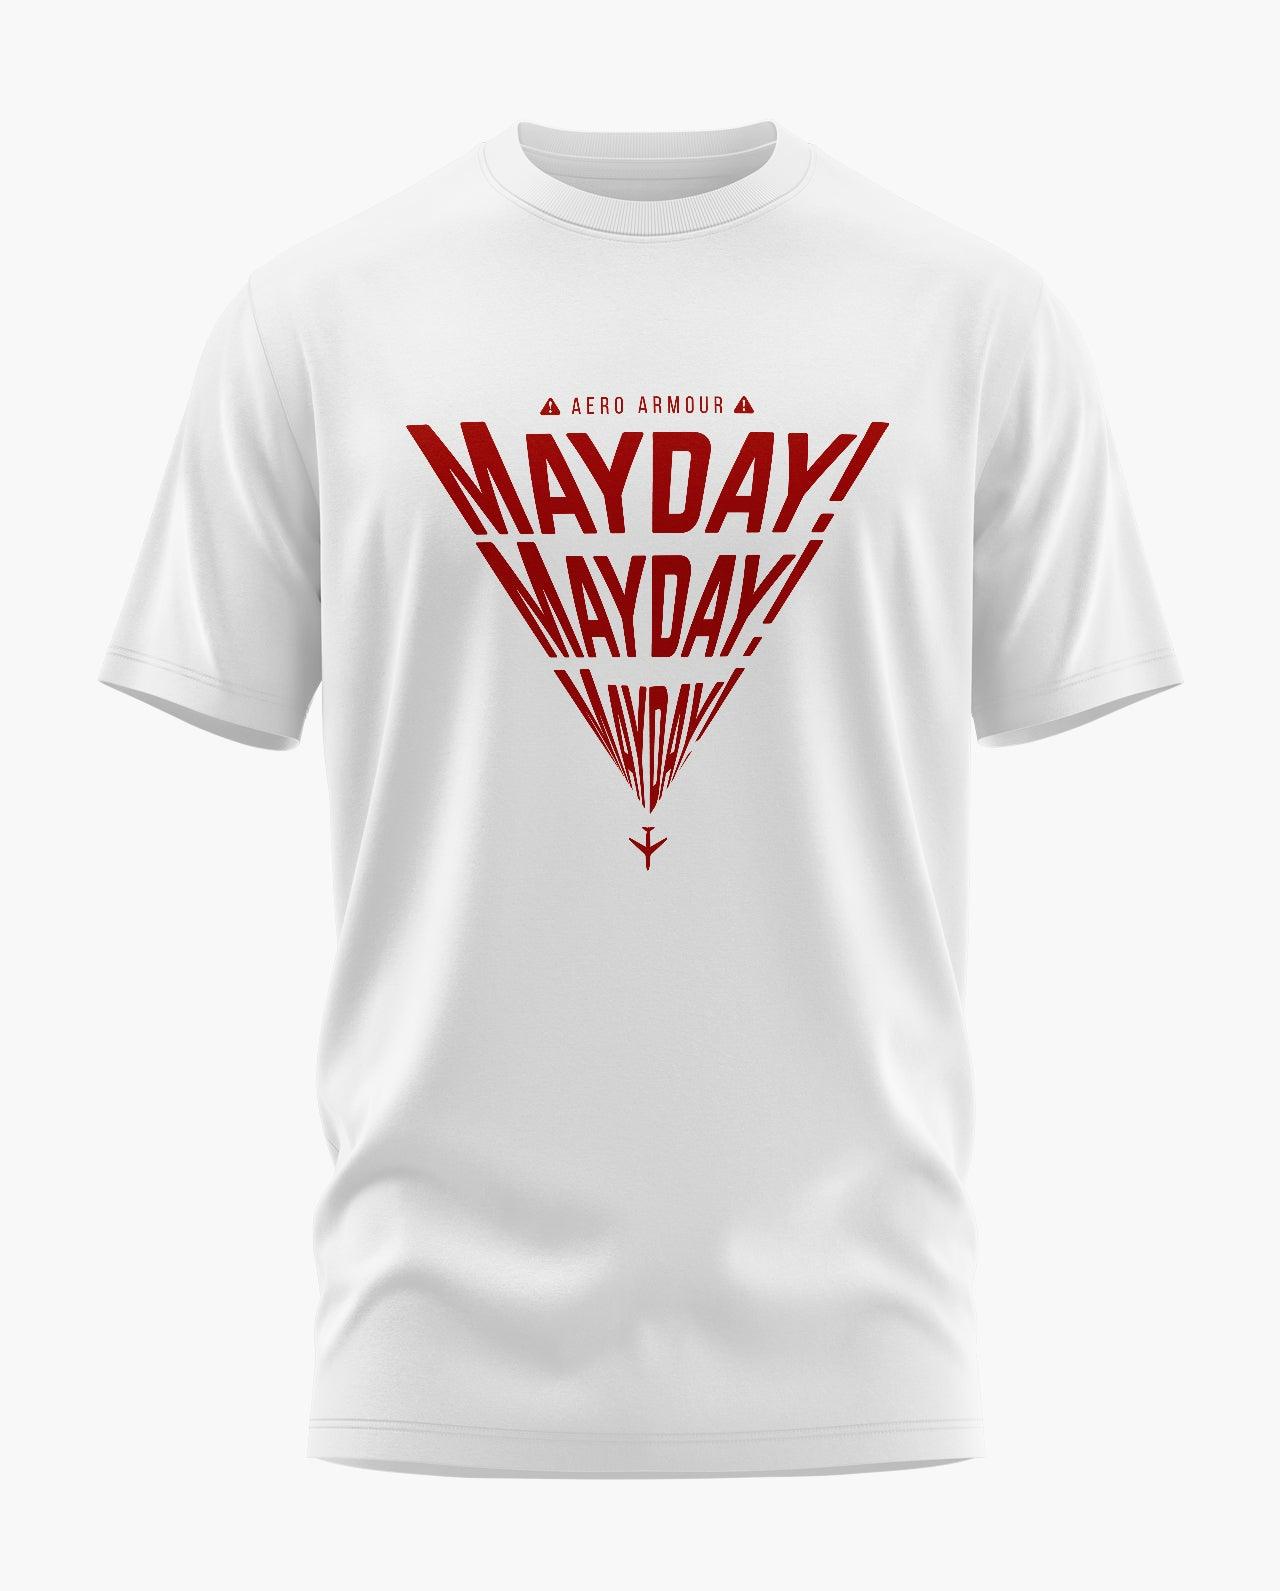 Mayday T-Shirt - Aero Armour